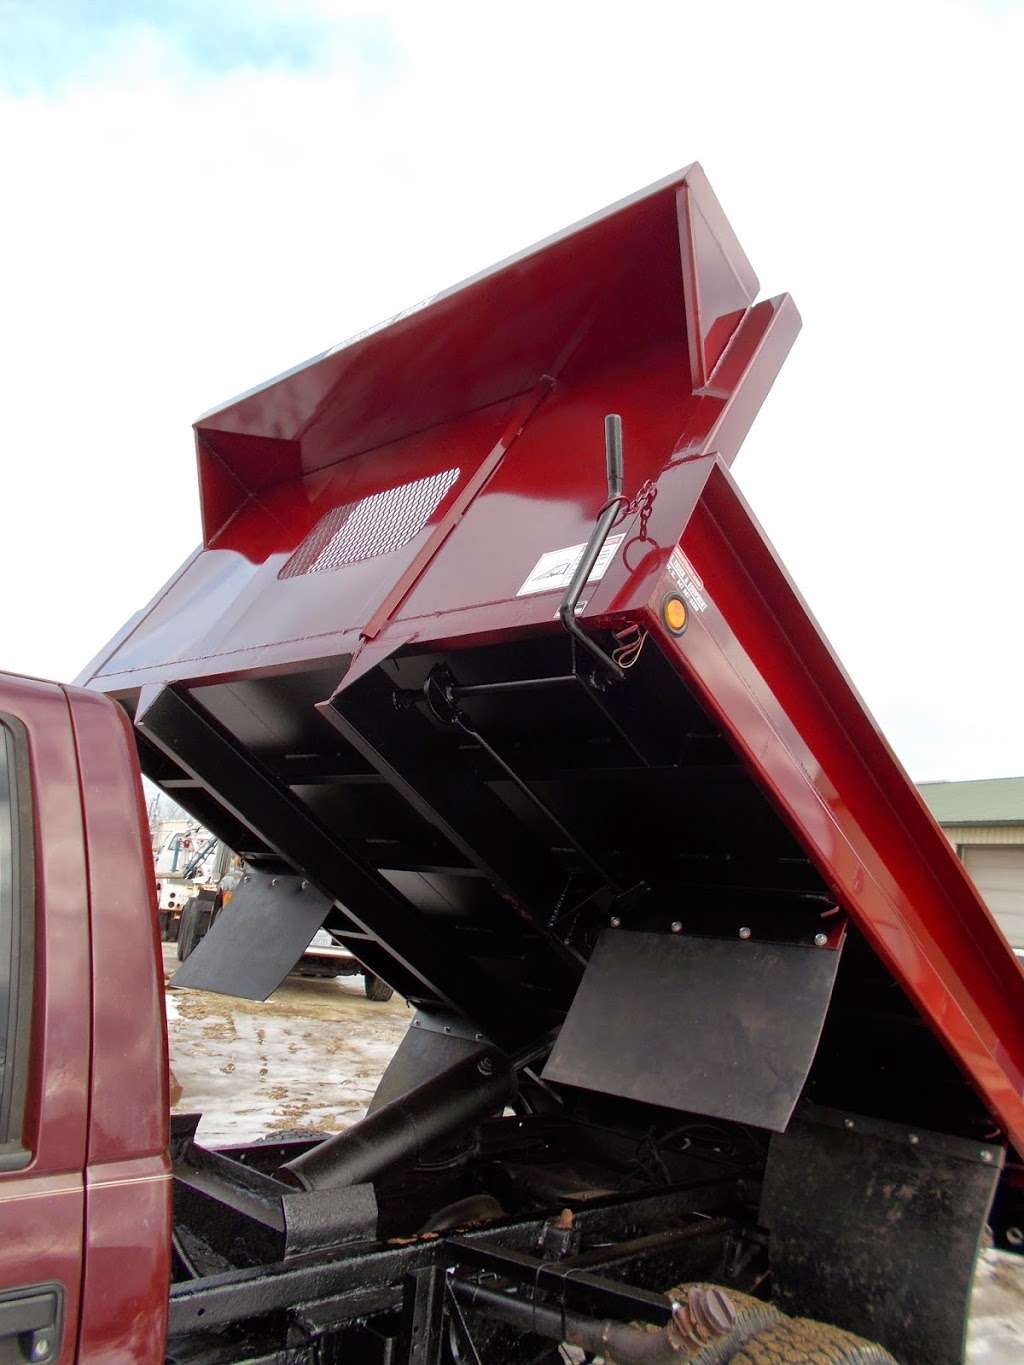 Northshore Truck & Equipment | 29900 Skokie Hwy B, Lake Bluff, IL 60044, USA | Phone: (847) 887-0200